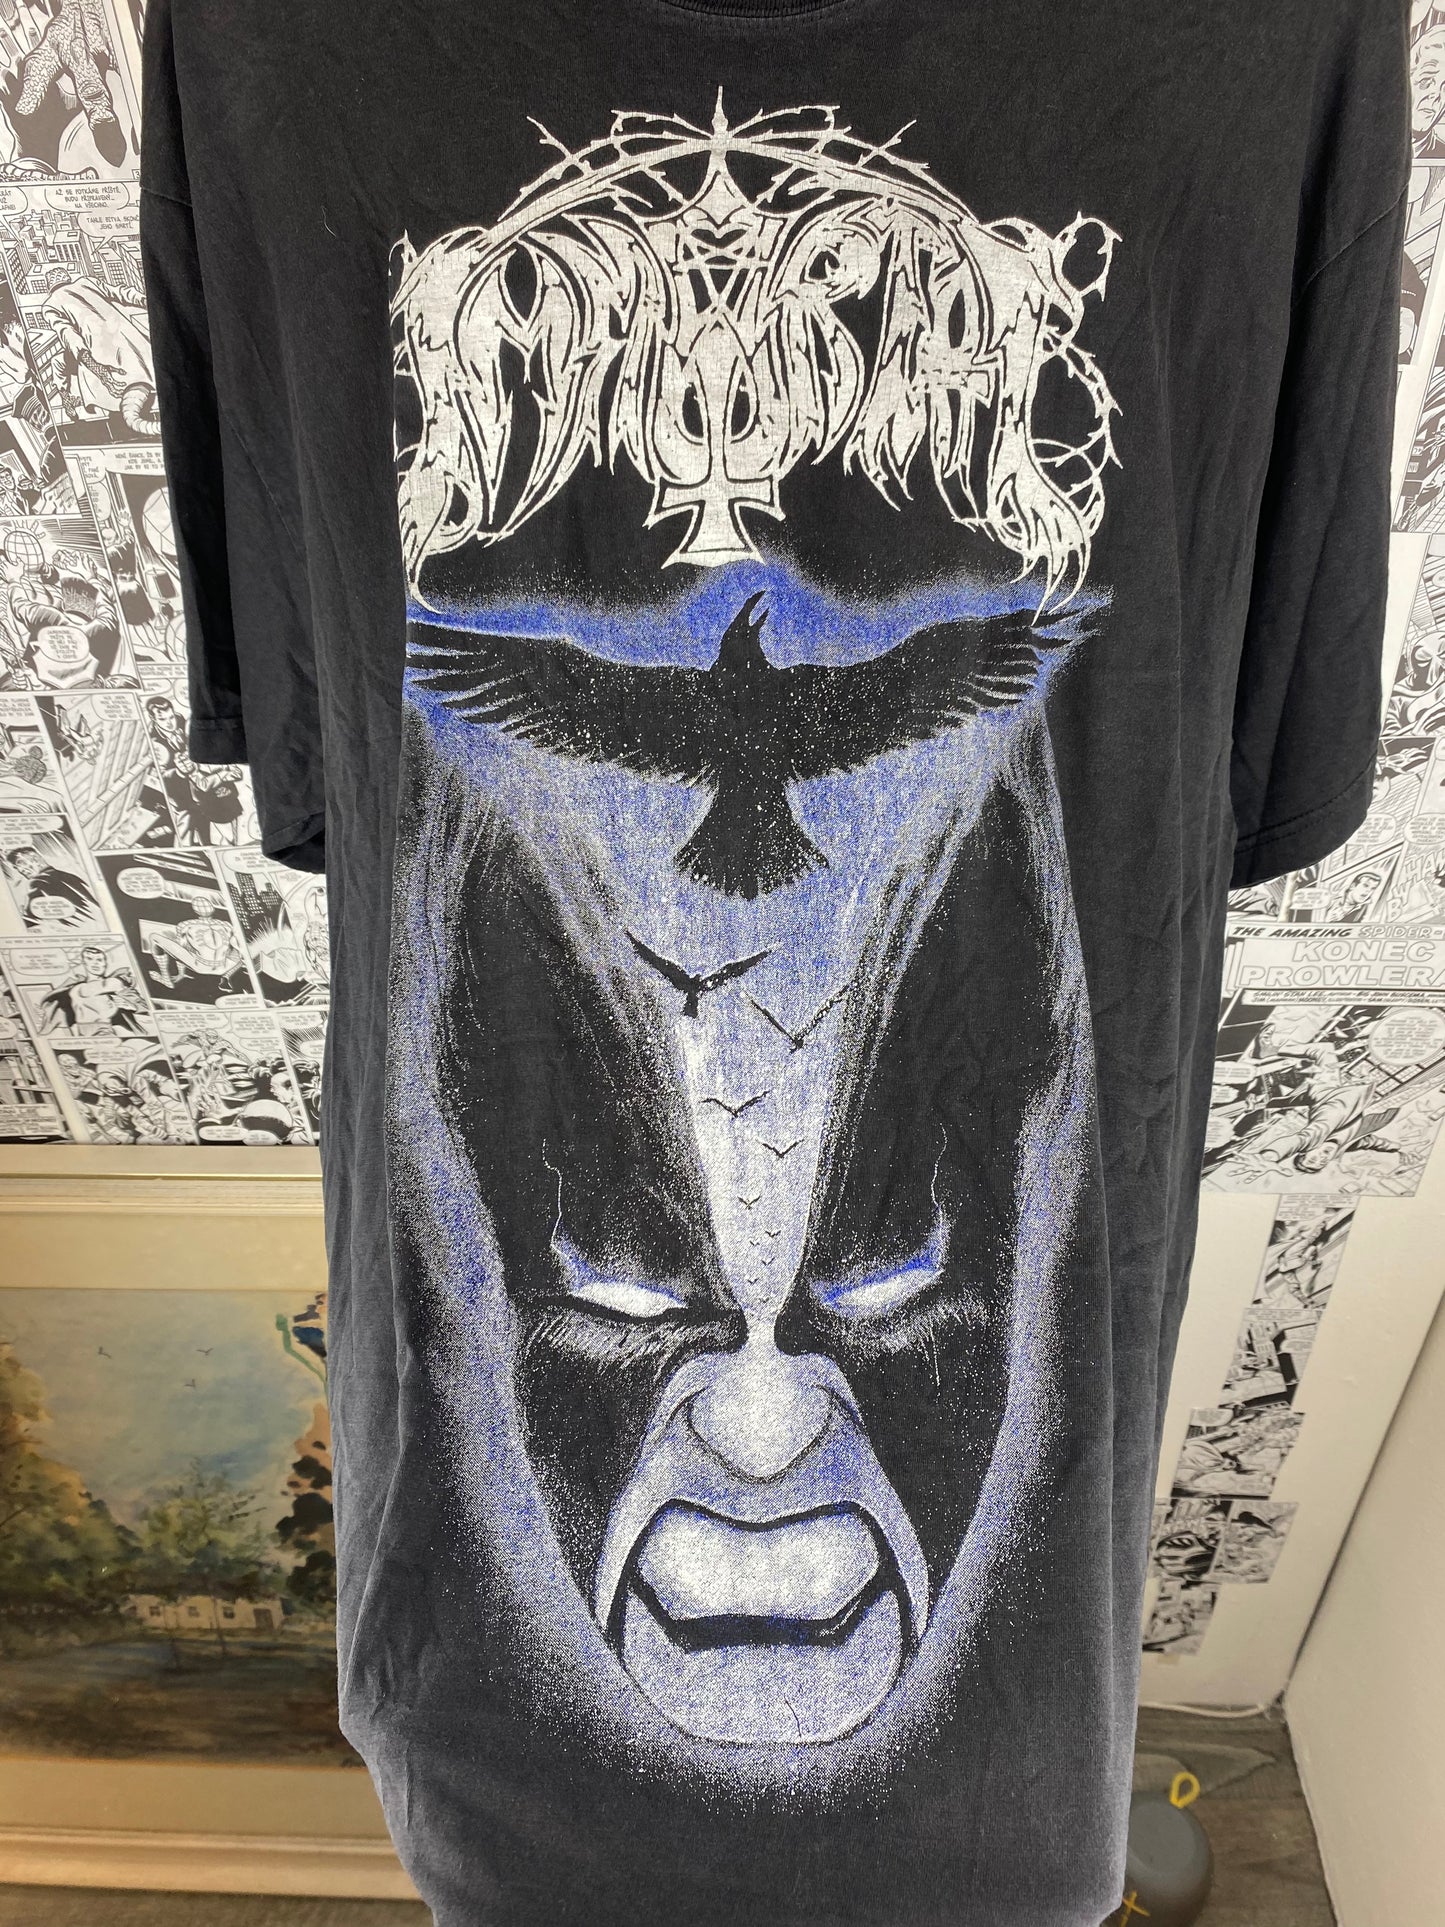 Vintage Immortal “Blizzard Beasts” 1997 t-shirt - size XL